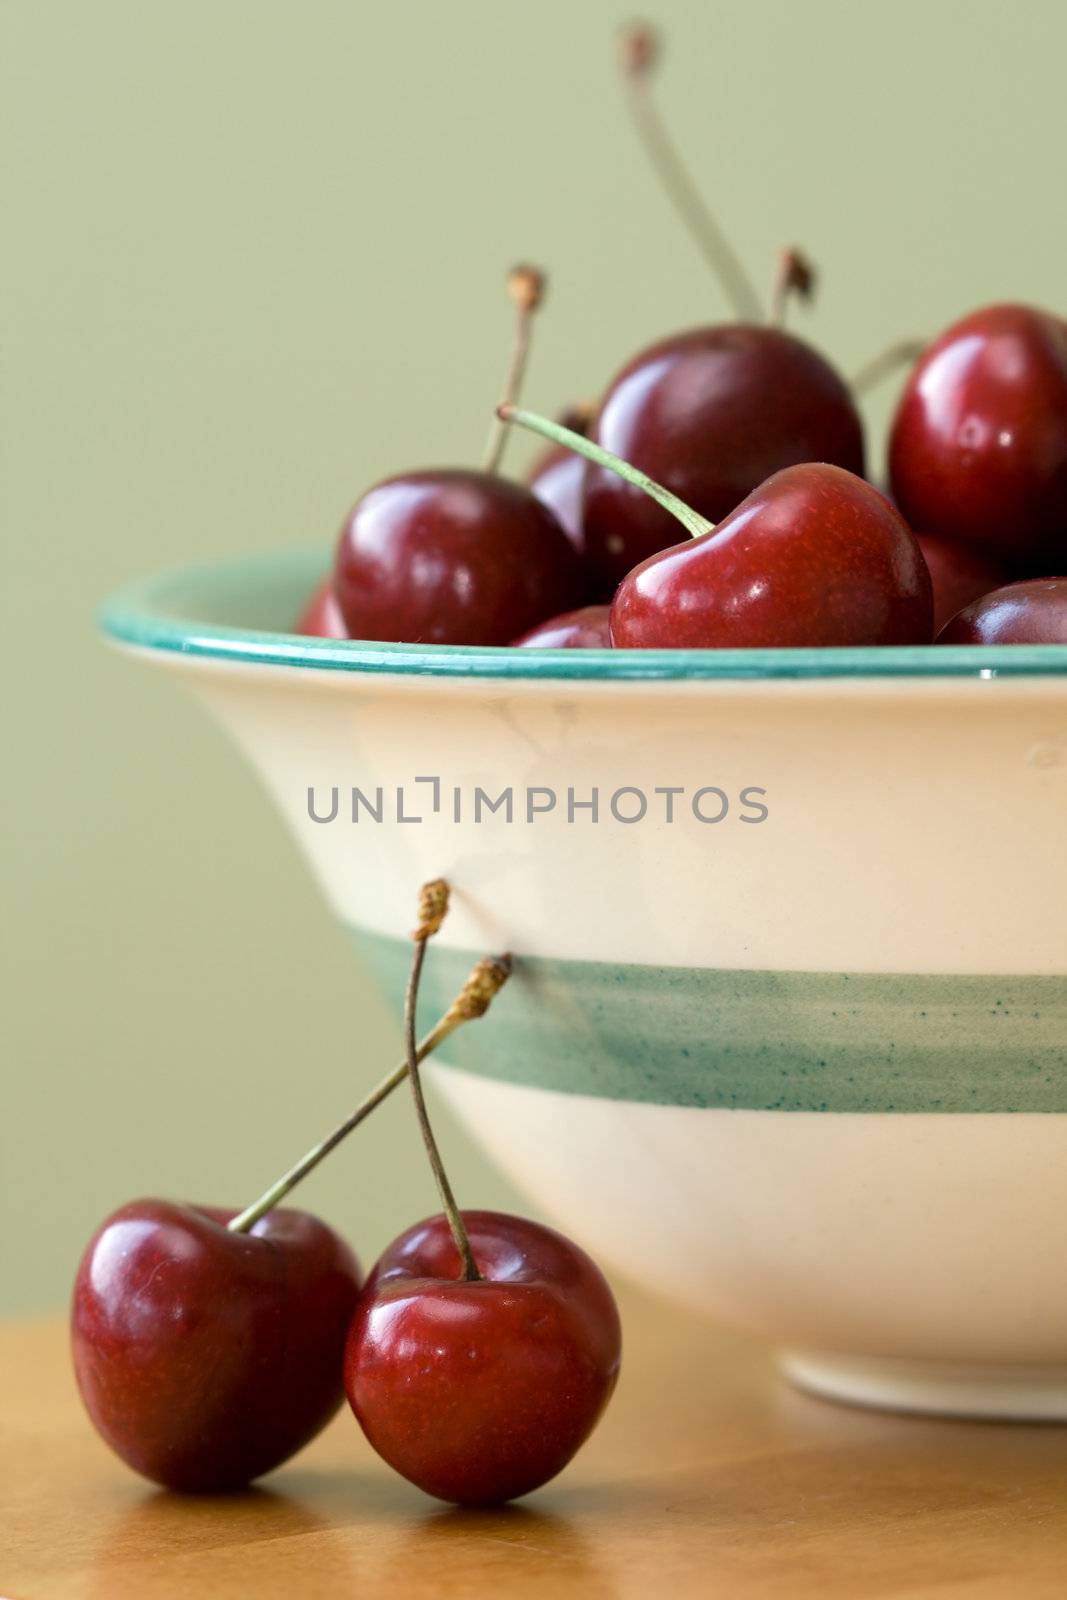 Black cherries in a green striped bowl